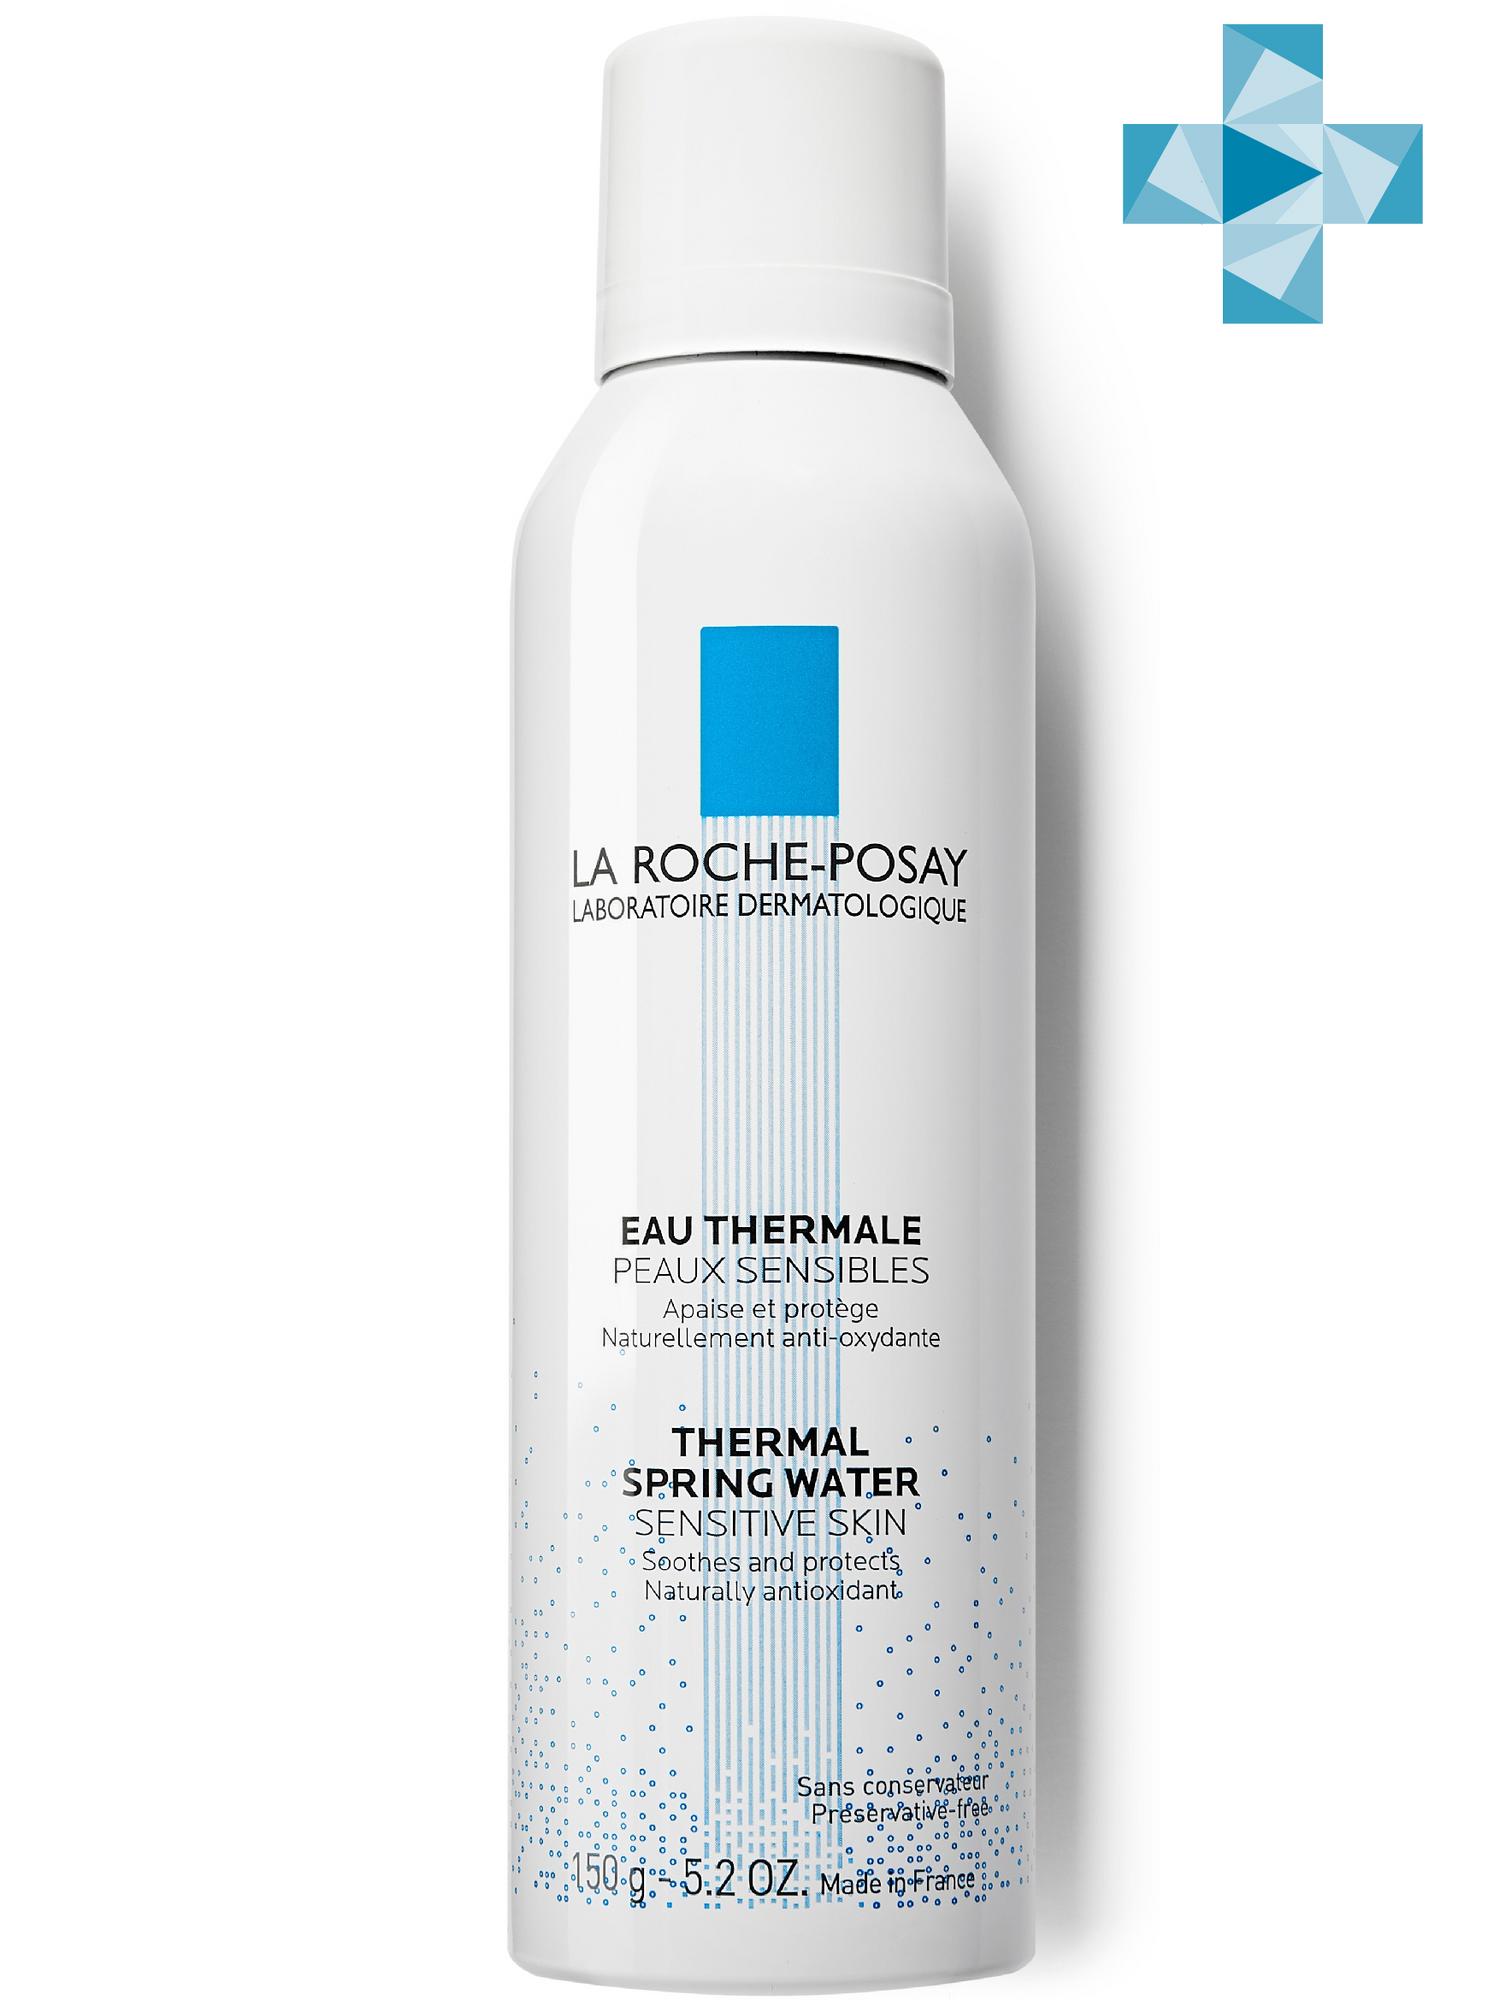 La Roche-Posay Термальная вода для всех типов кожи, 150 мл (La Roche-Posay, Thermal Water)